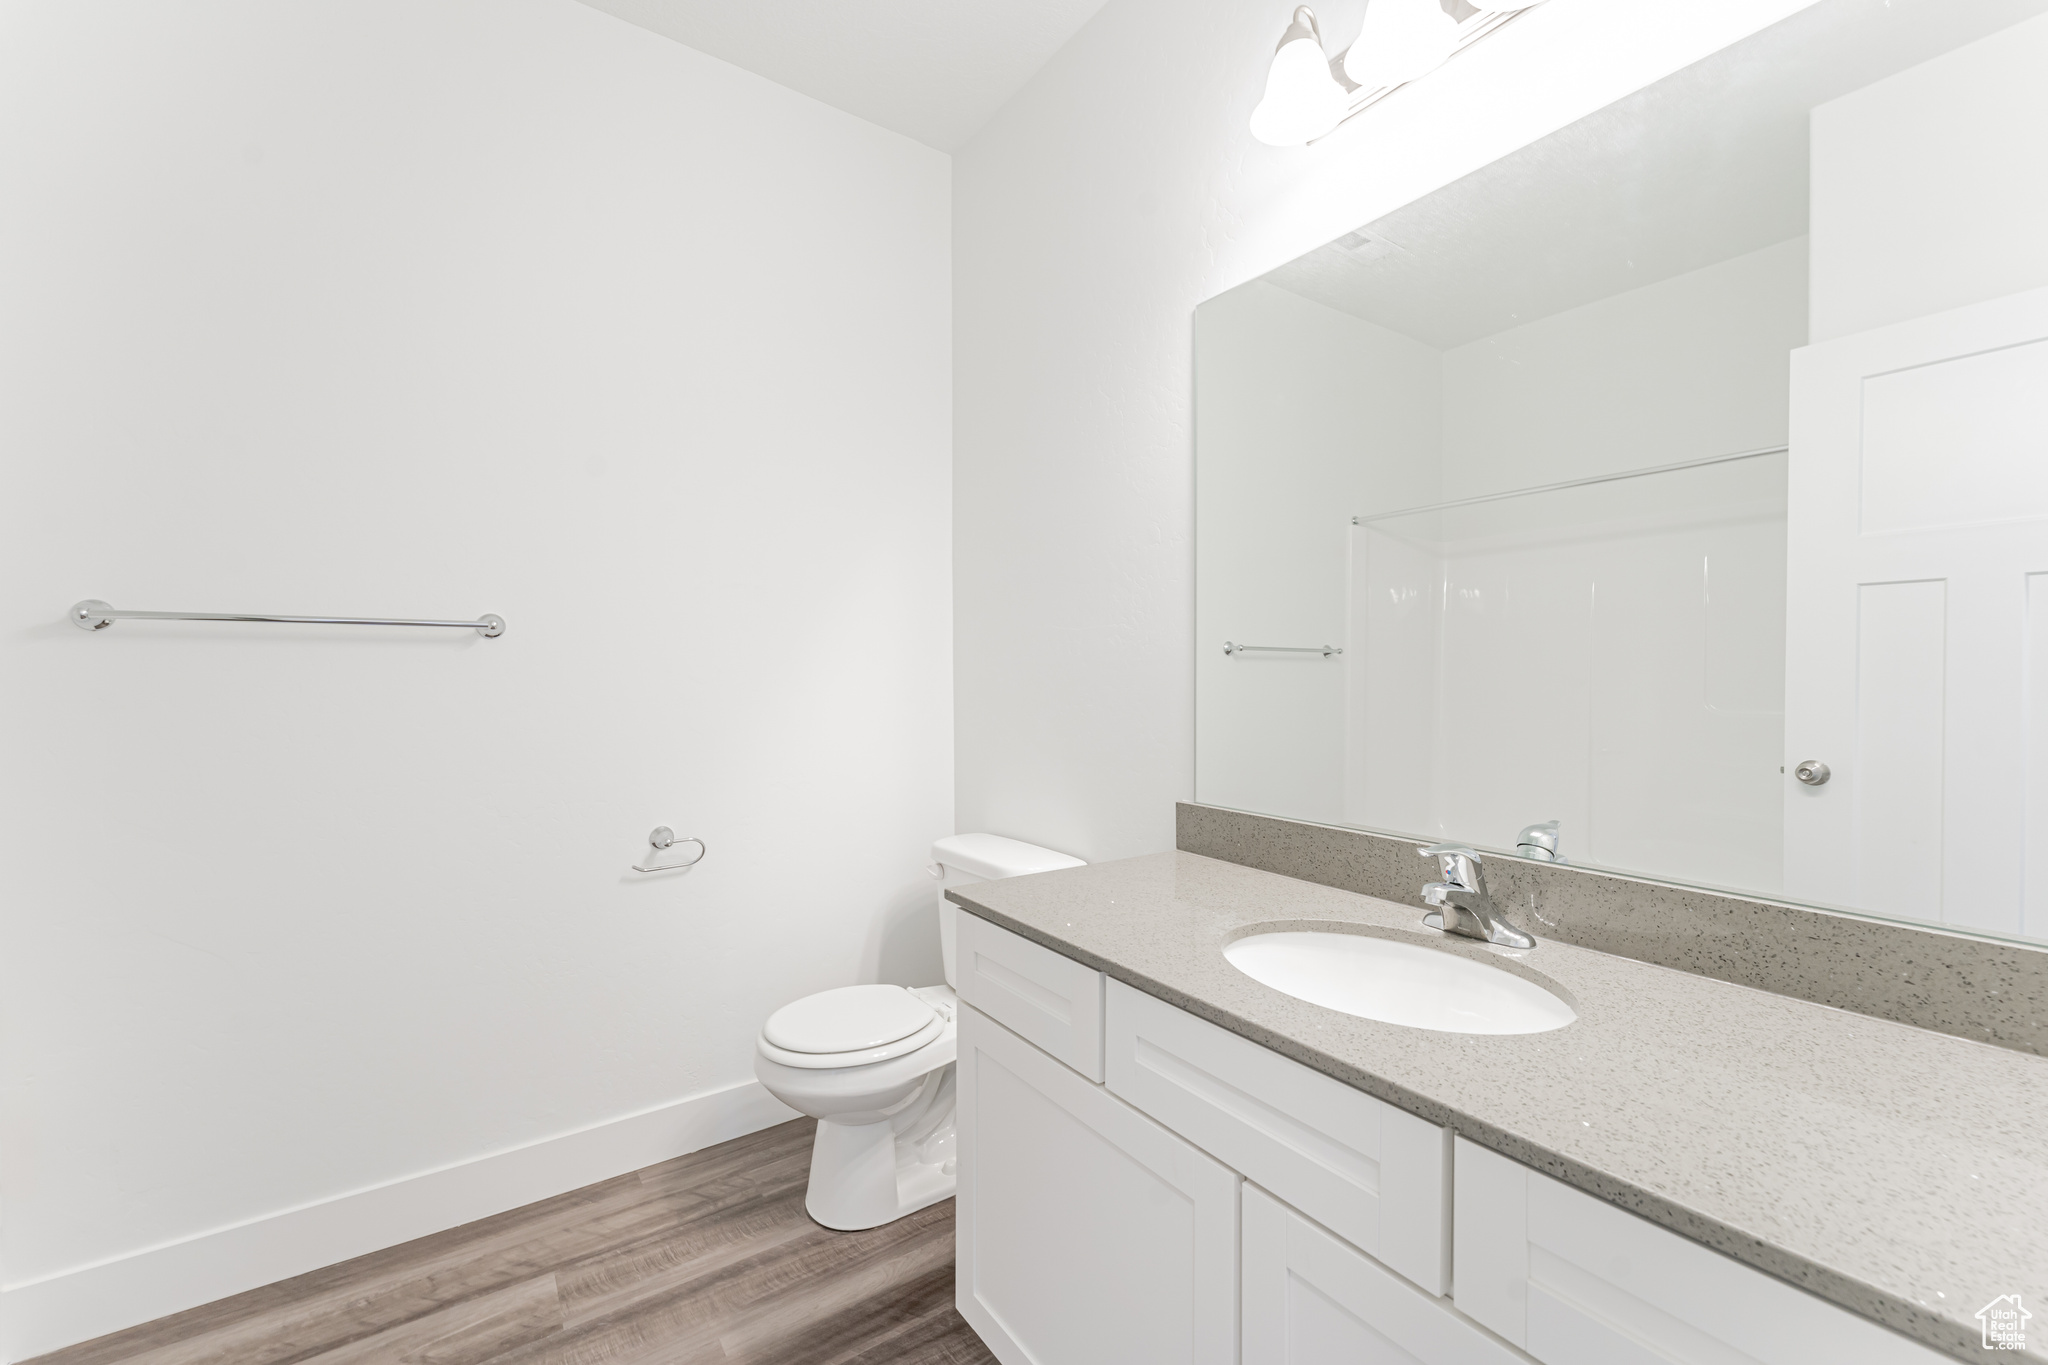 Bathroom with toilet, hardwood / wood-style floors, and vanity